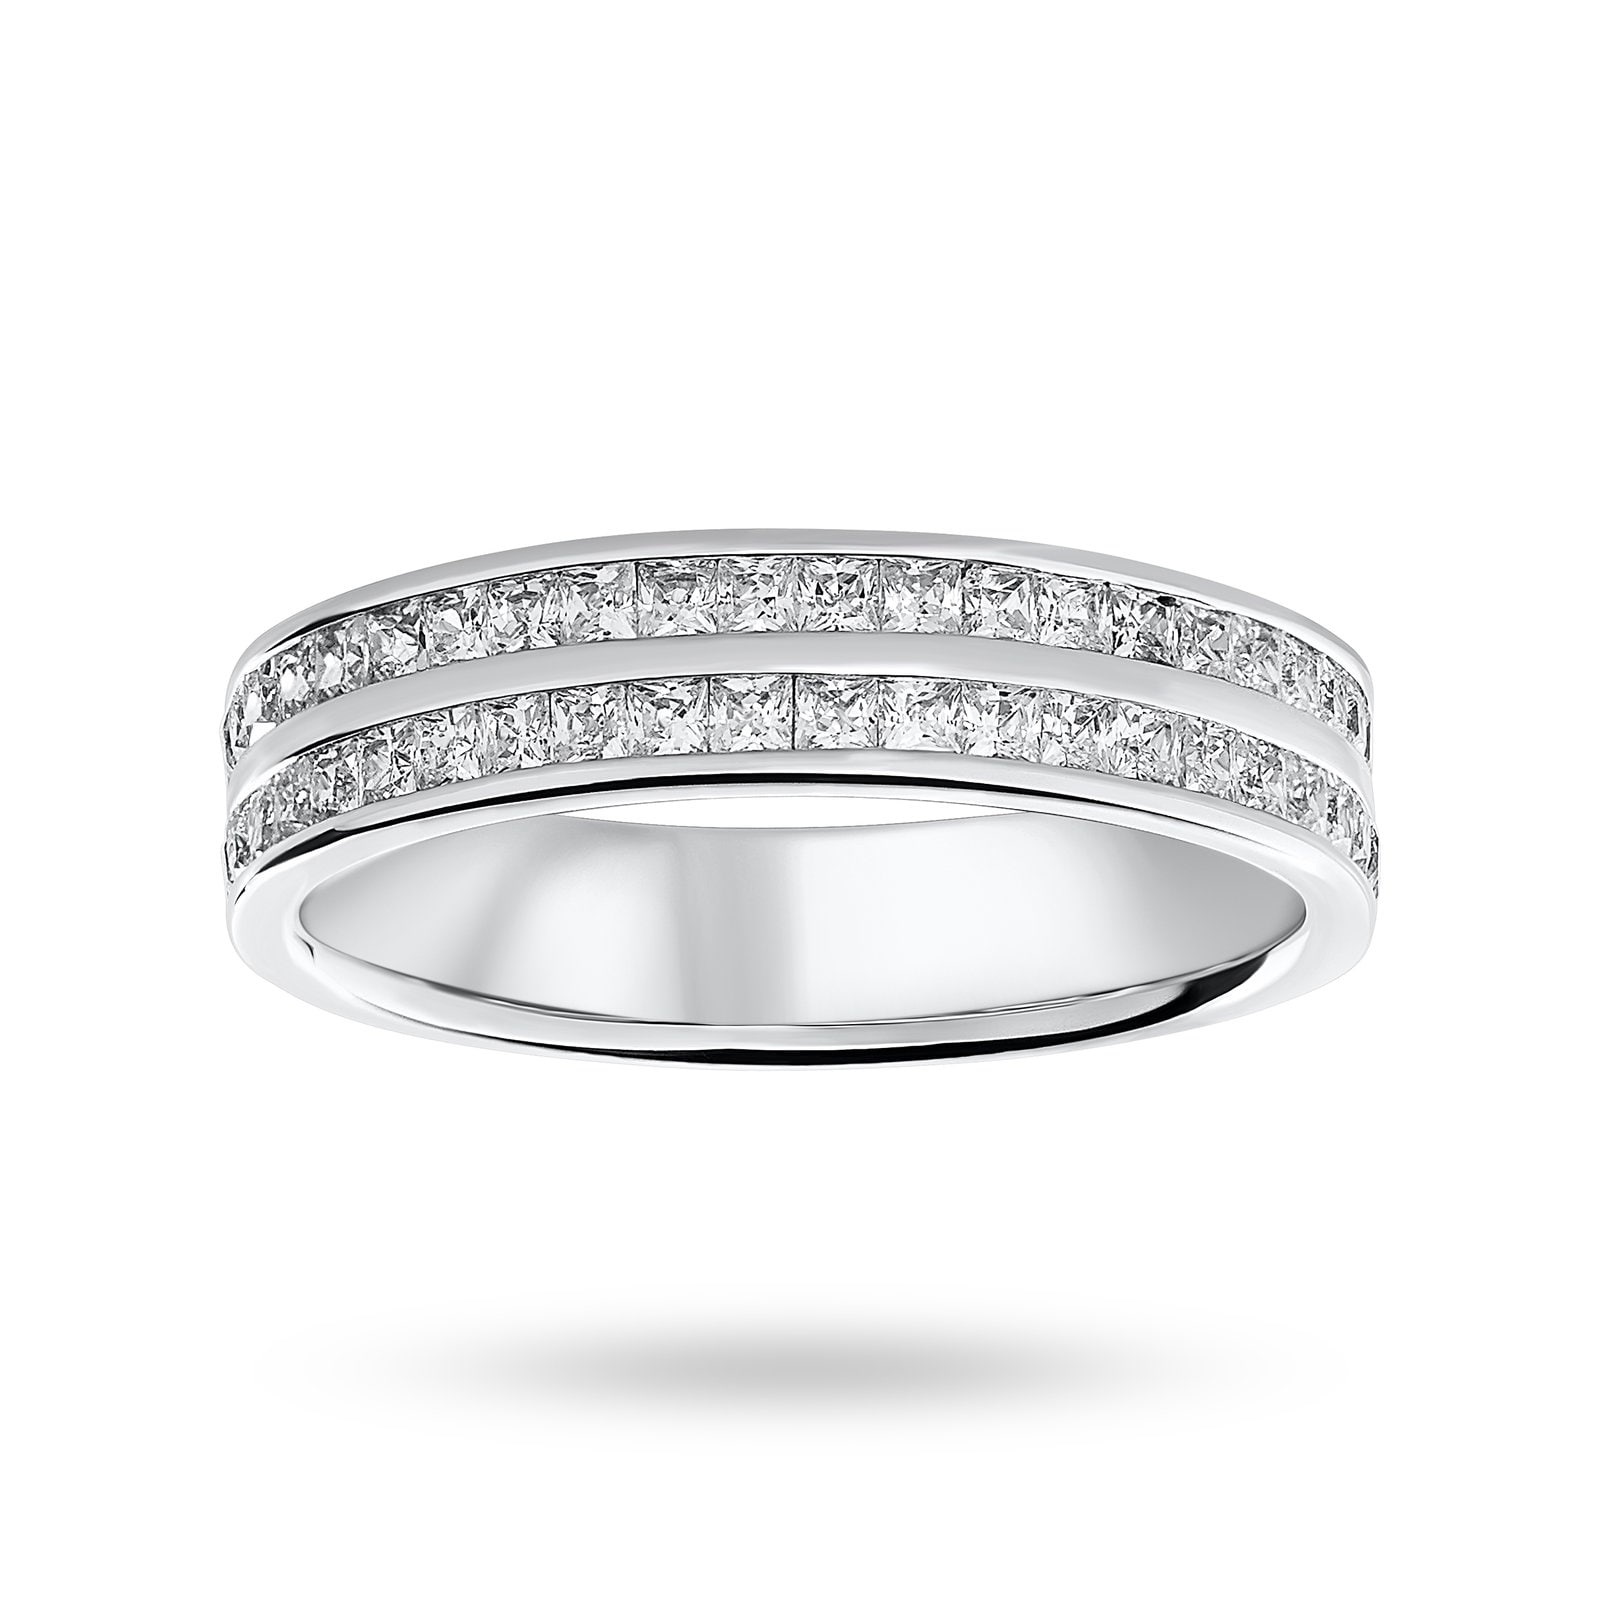 18 Carat White Gold 0.75 Carat Princess Cut 2 Row Half Eternity Ring - Ring Size O